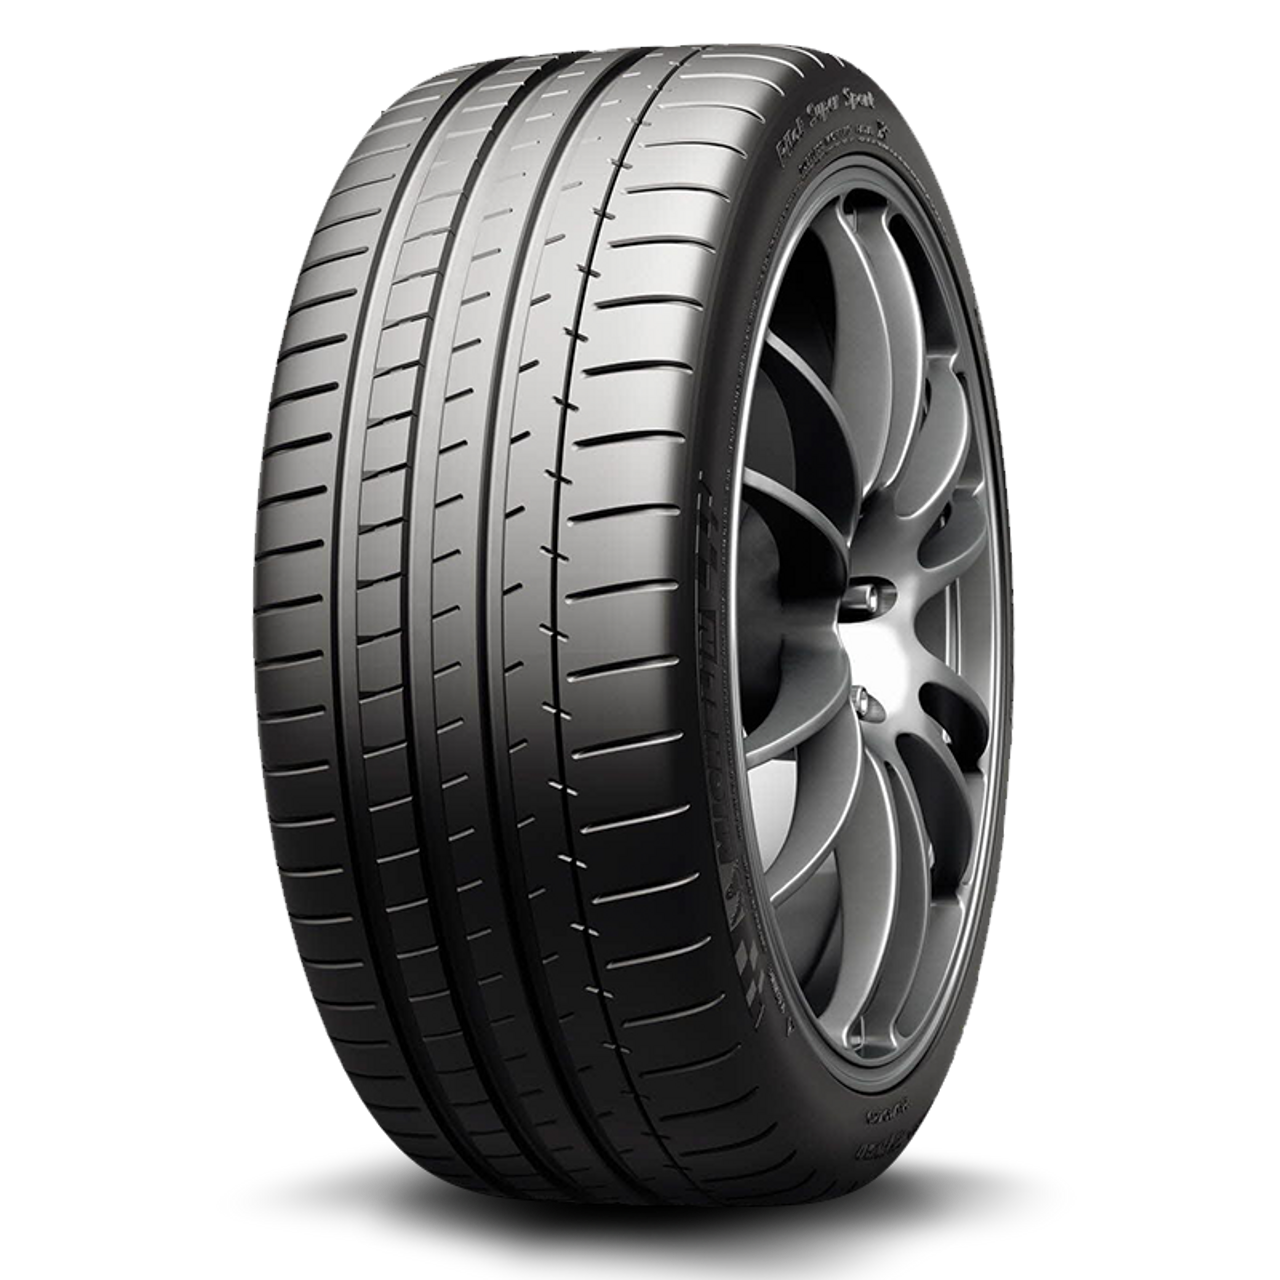 Michelin Pilot Super Sport 335/25ZR20 Tires 38353 335 25 20 Tire